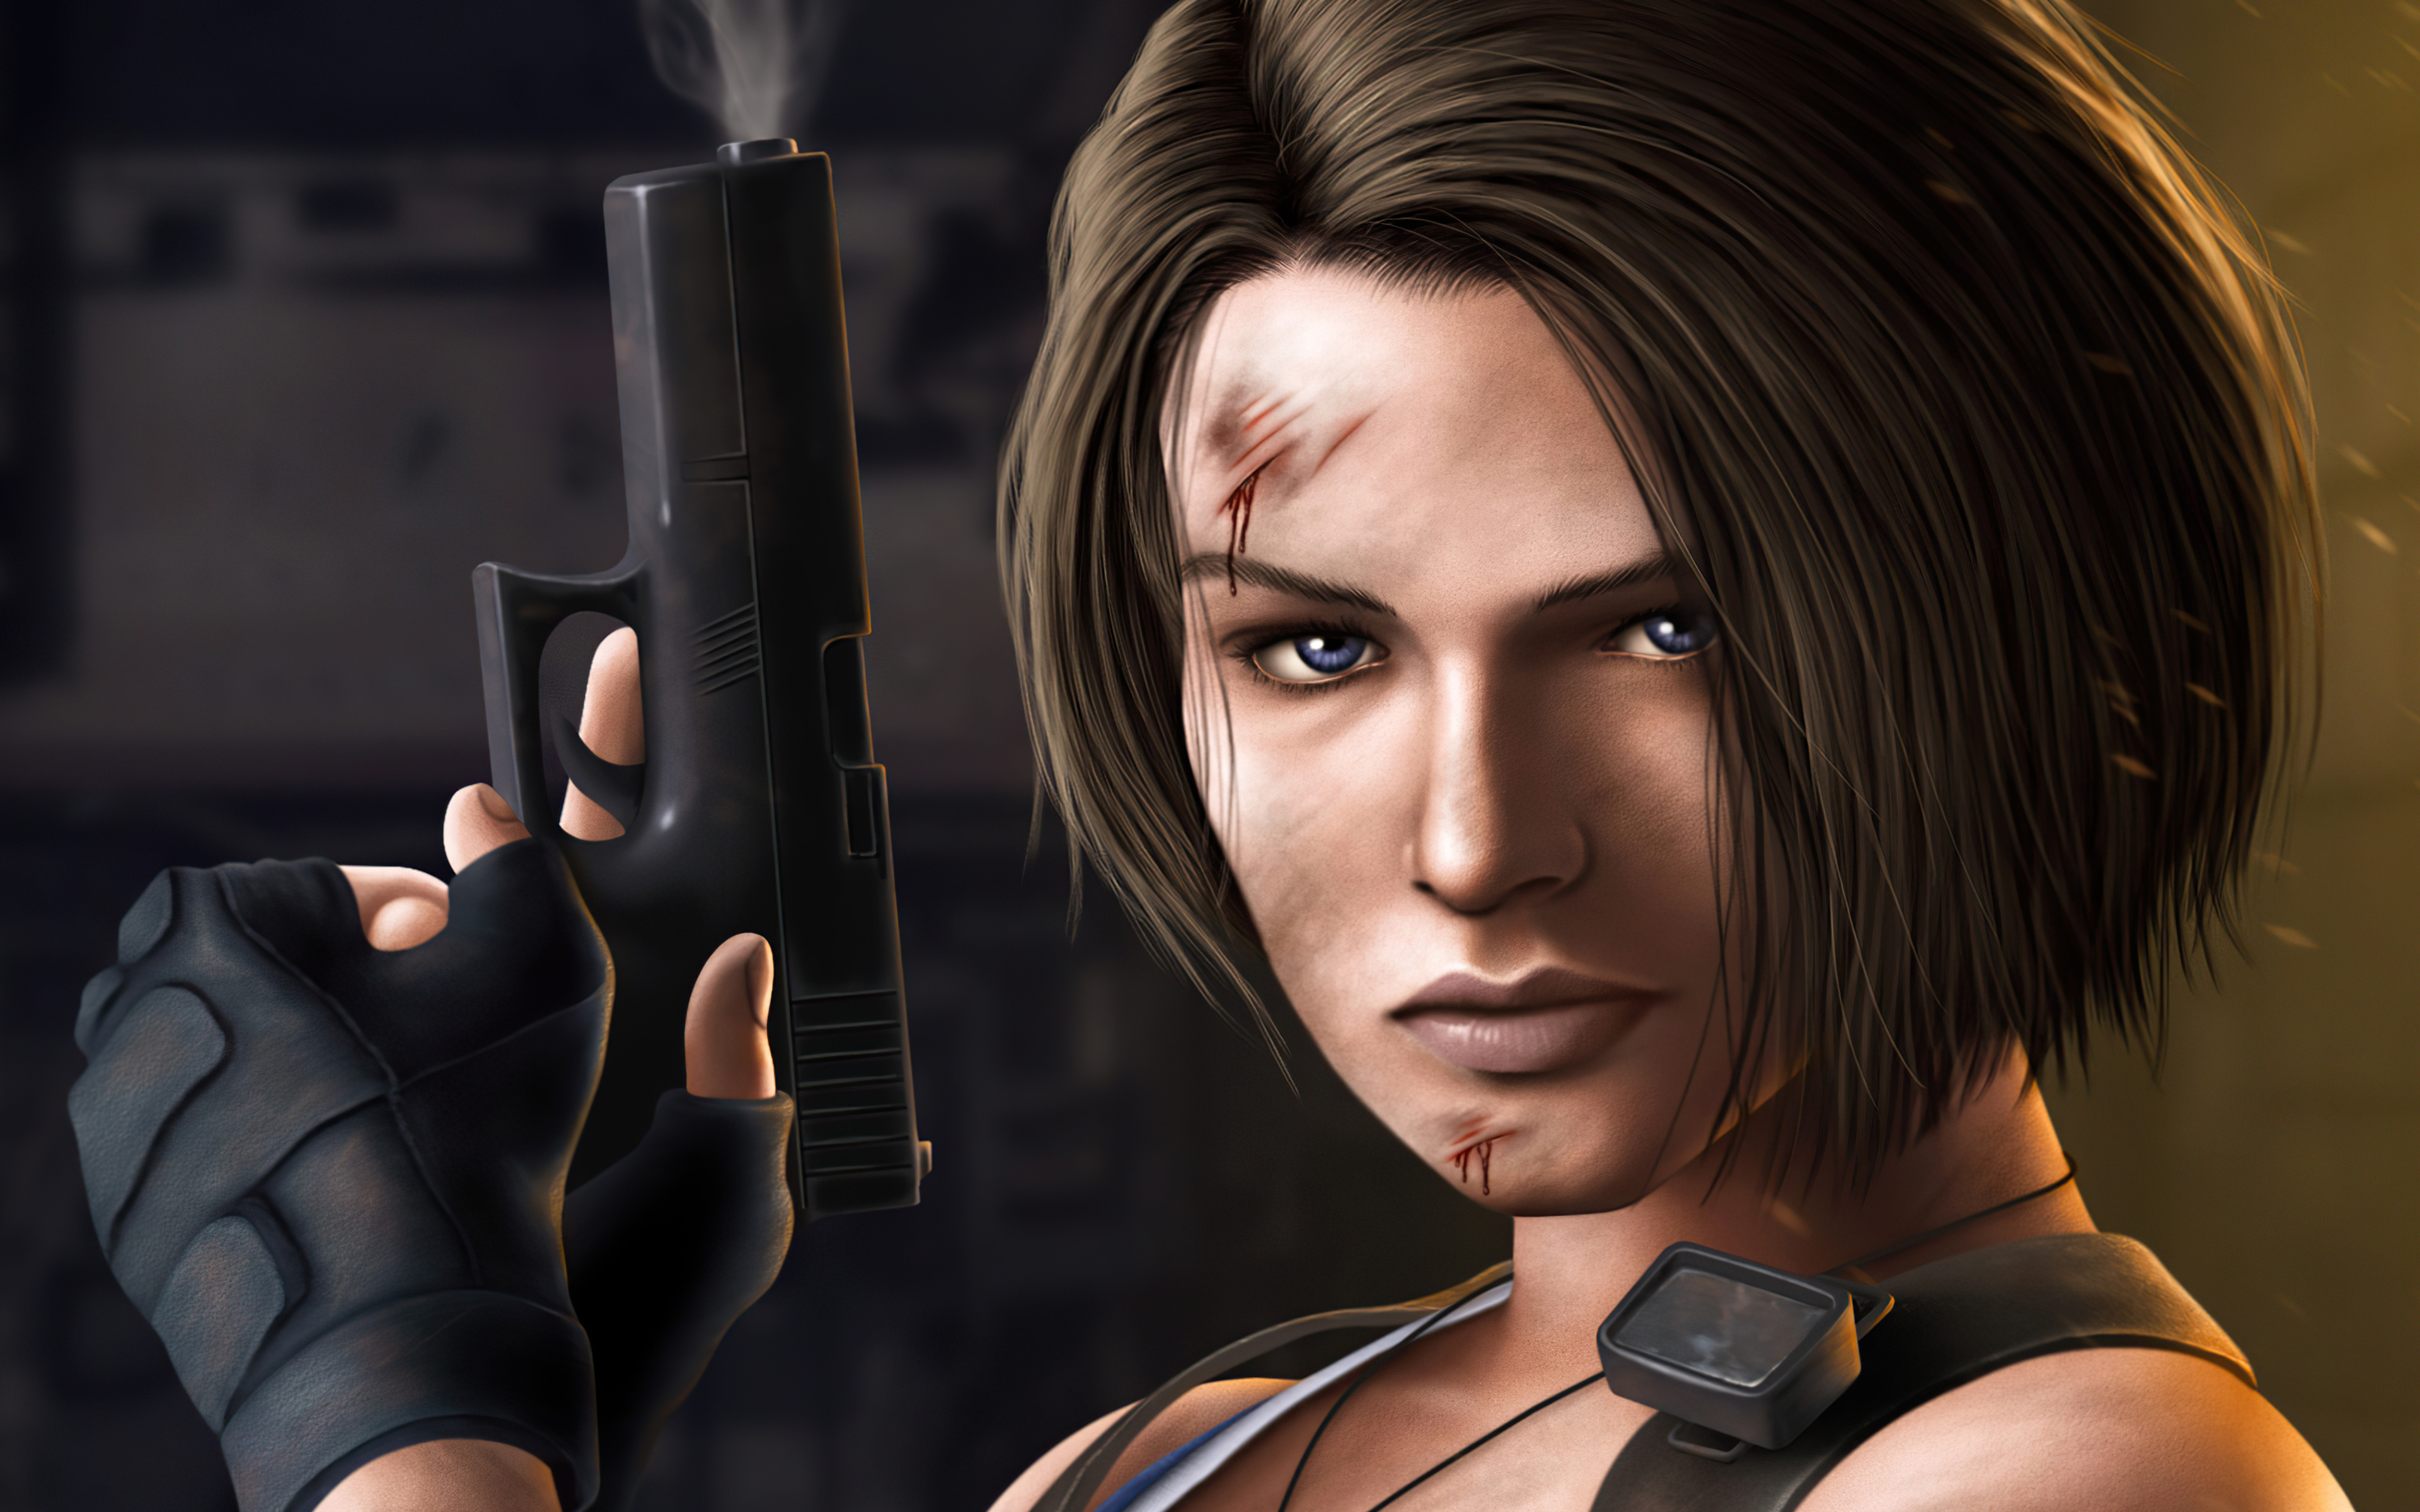 Jill Valentine with Gun Resident Evil 3 Wallpapers